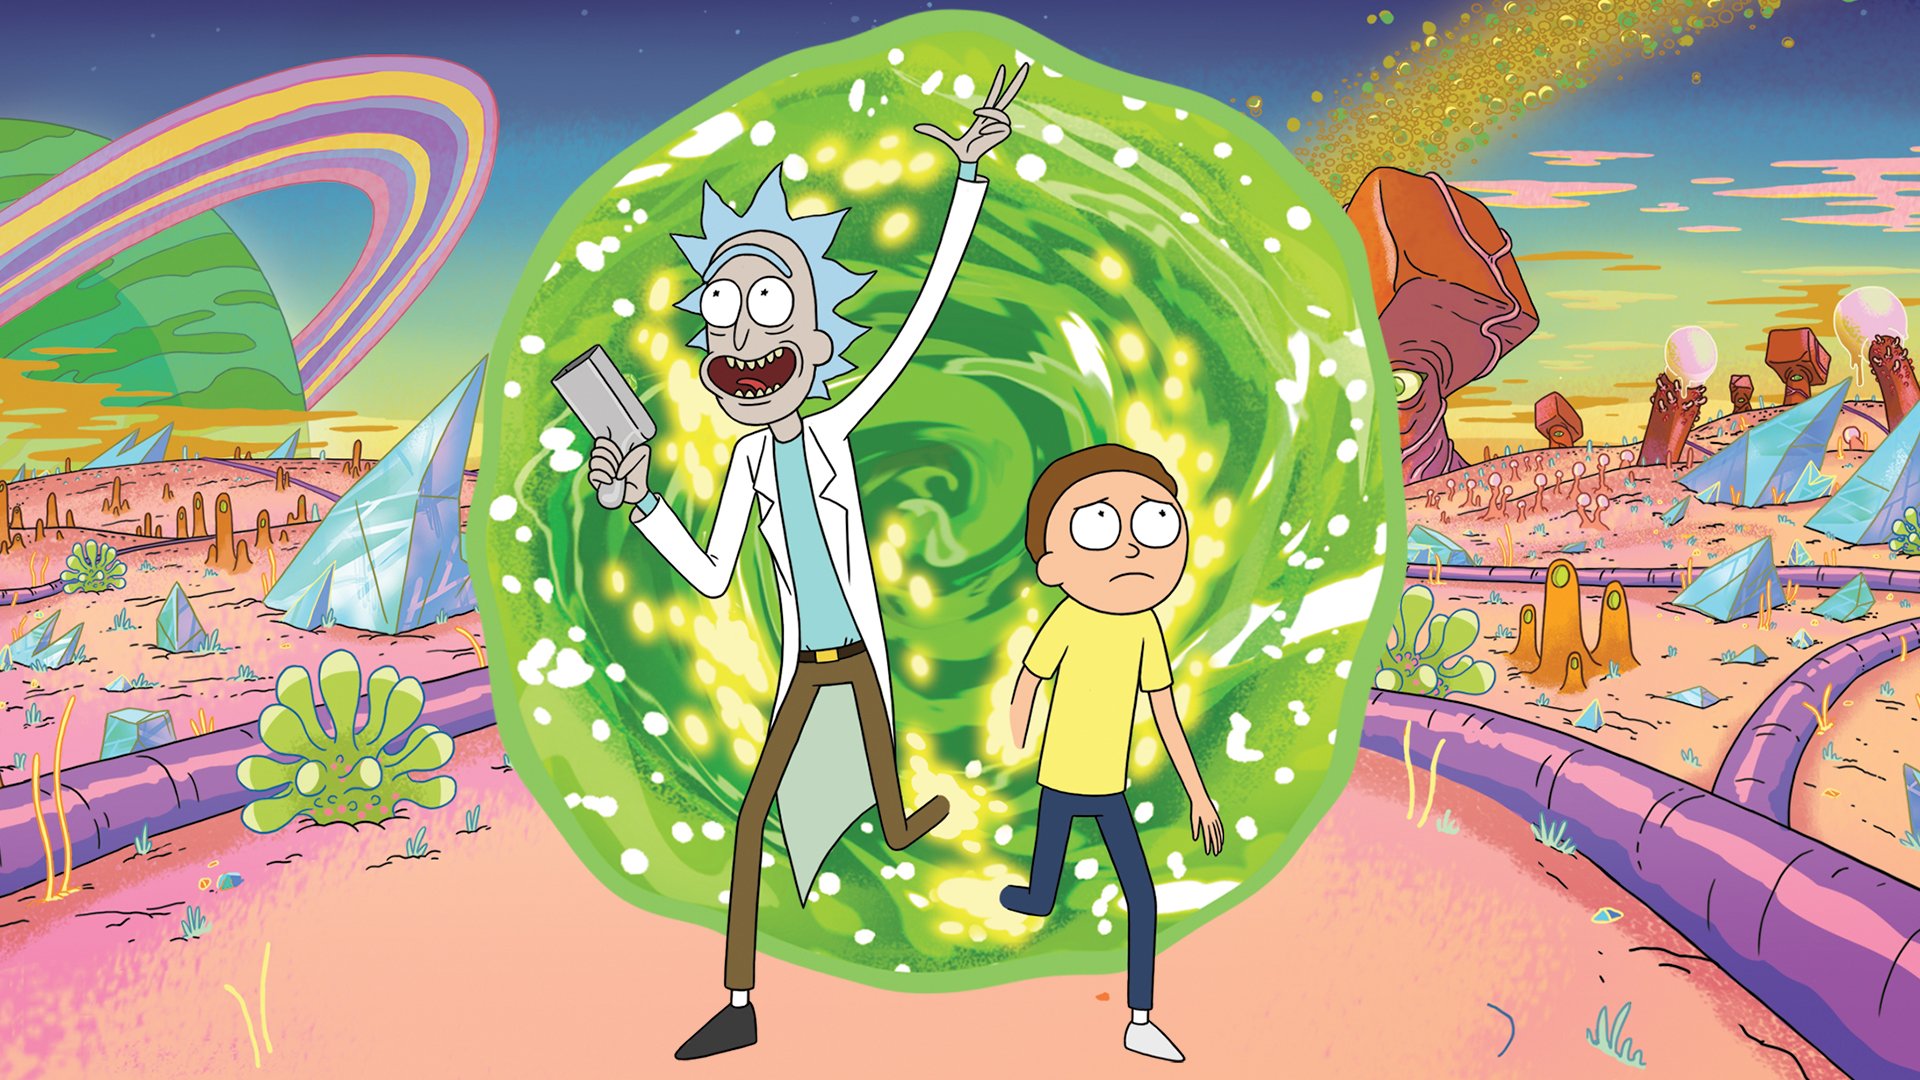 Rick and Morty HD Wallpaper: Interdimensional Adventure. Enjoy!